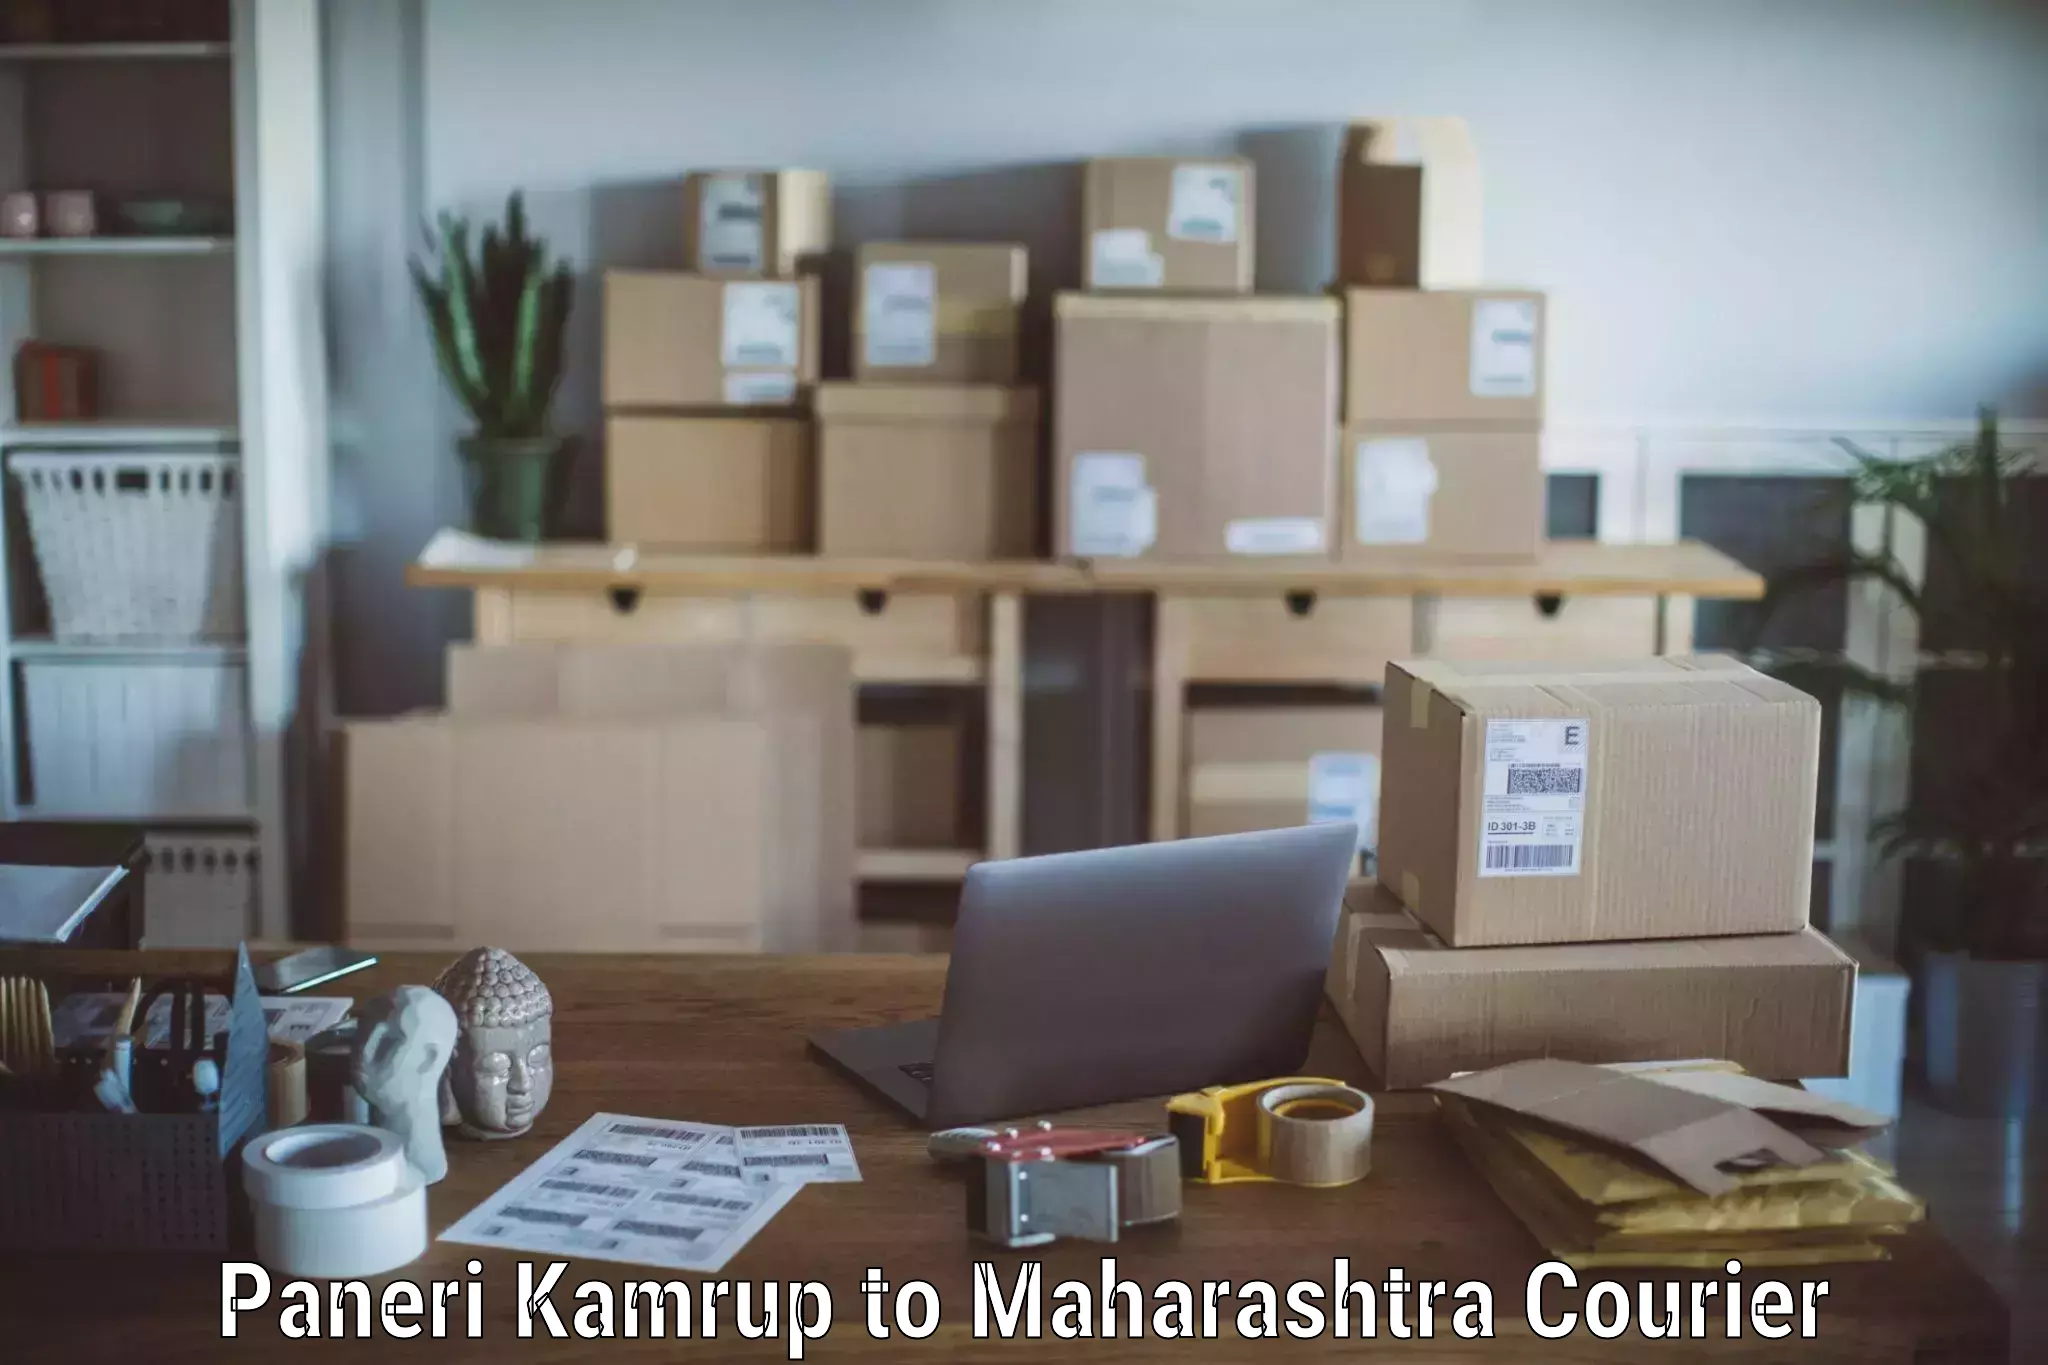 Professional moving company Paneri Kamrup to Tuljapur